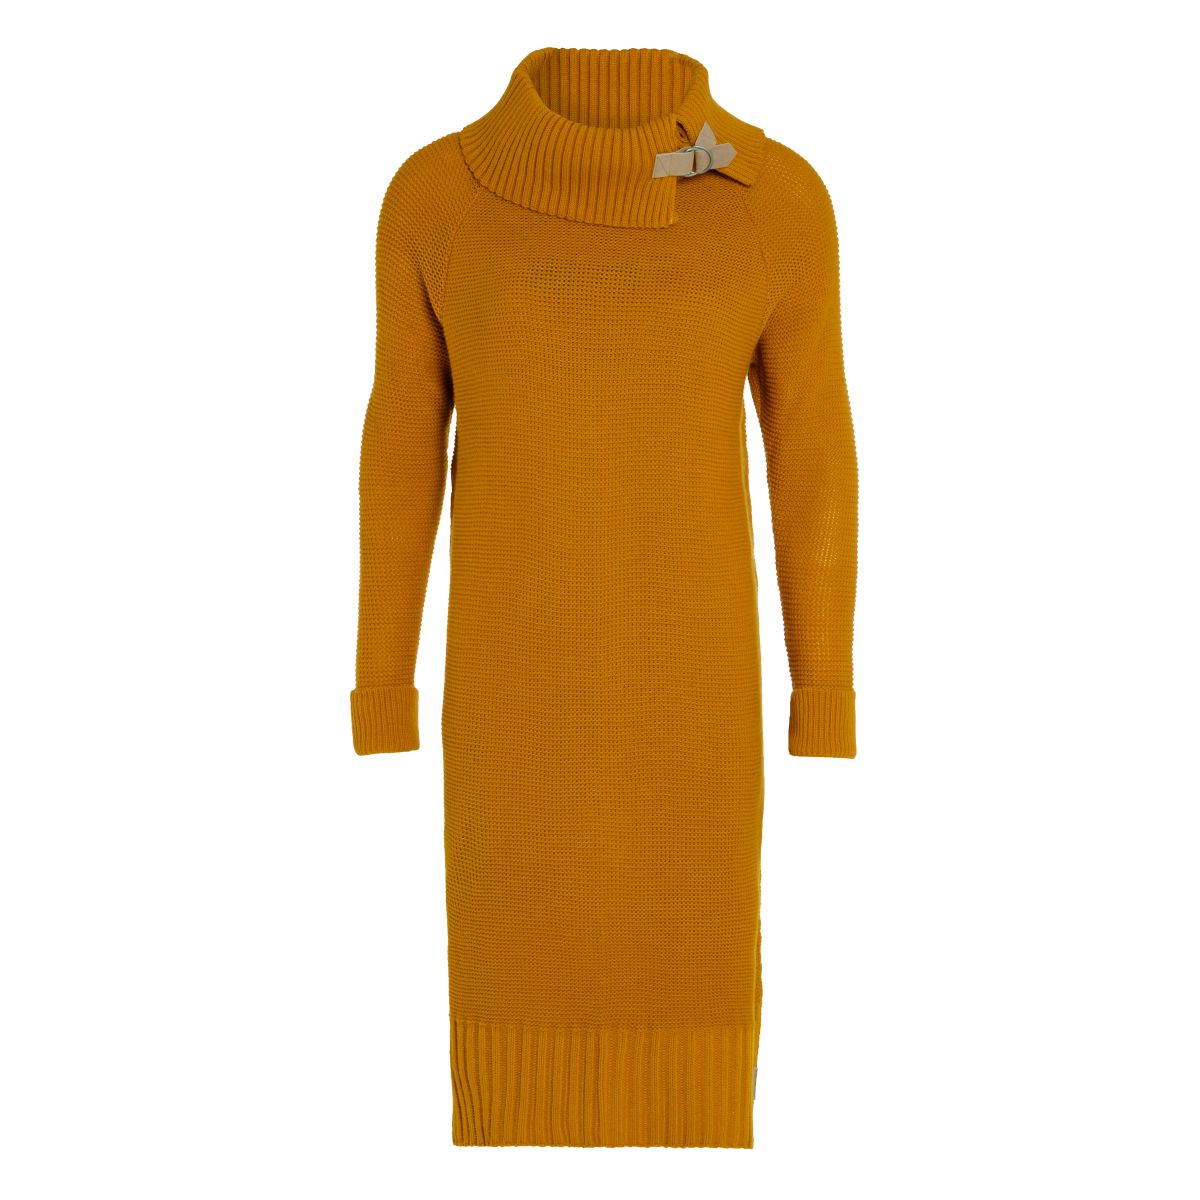 jamie knitted dress ochre 4042